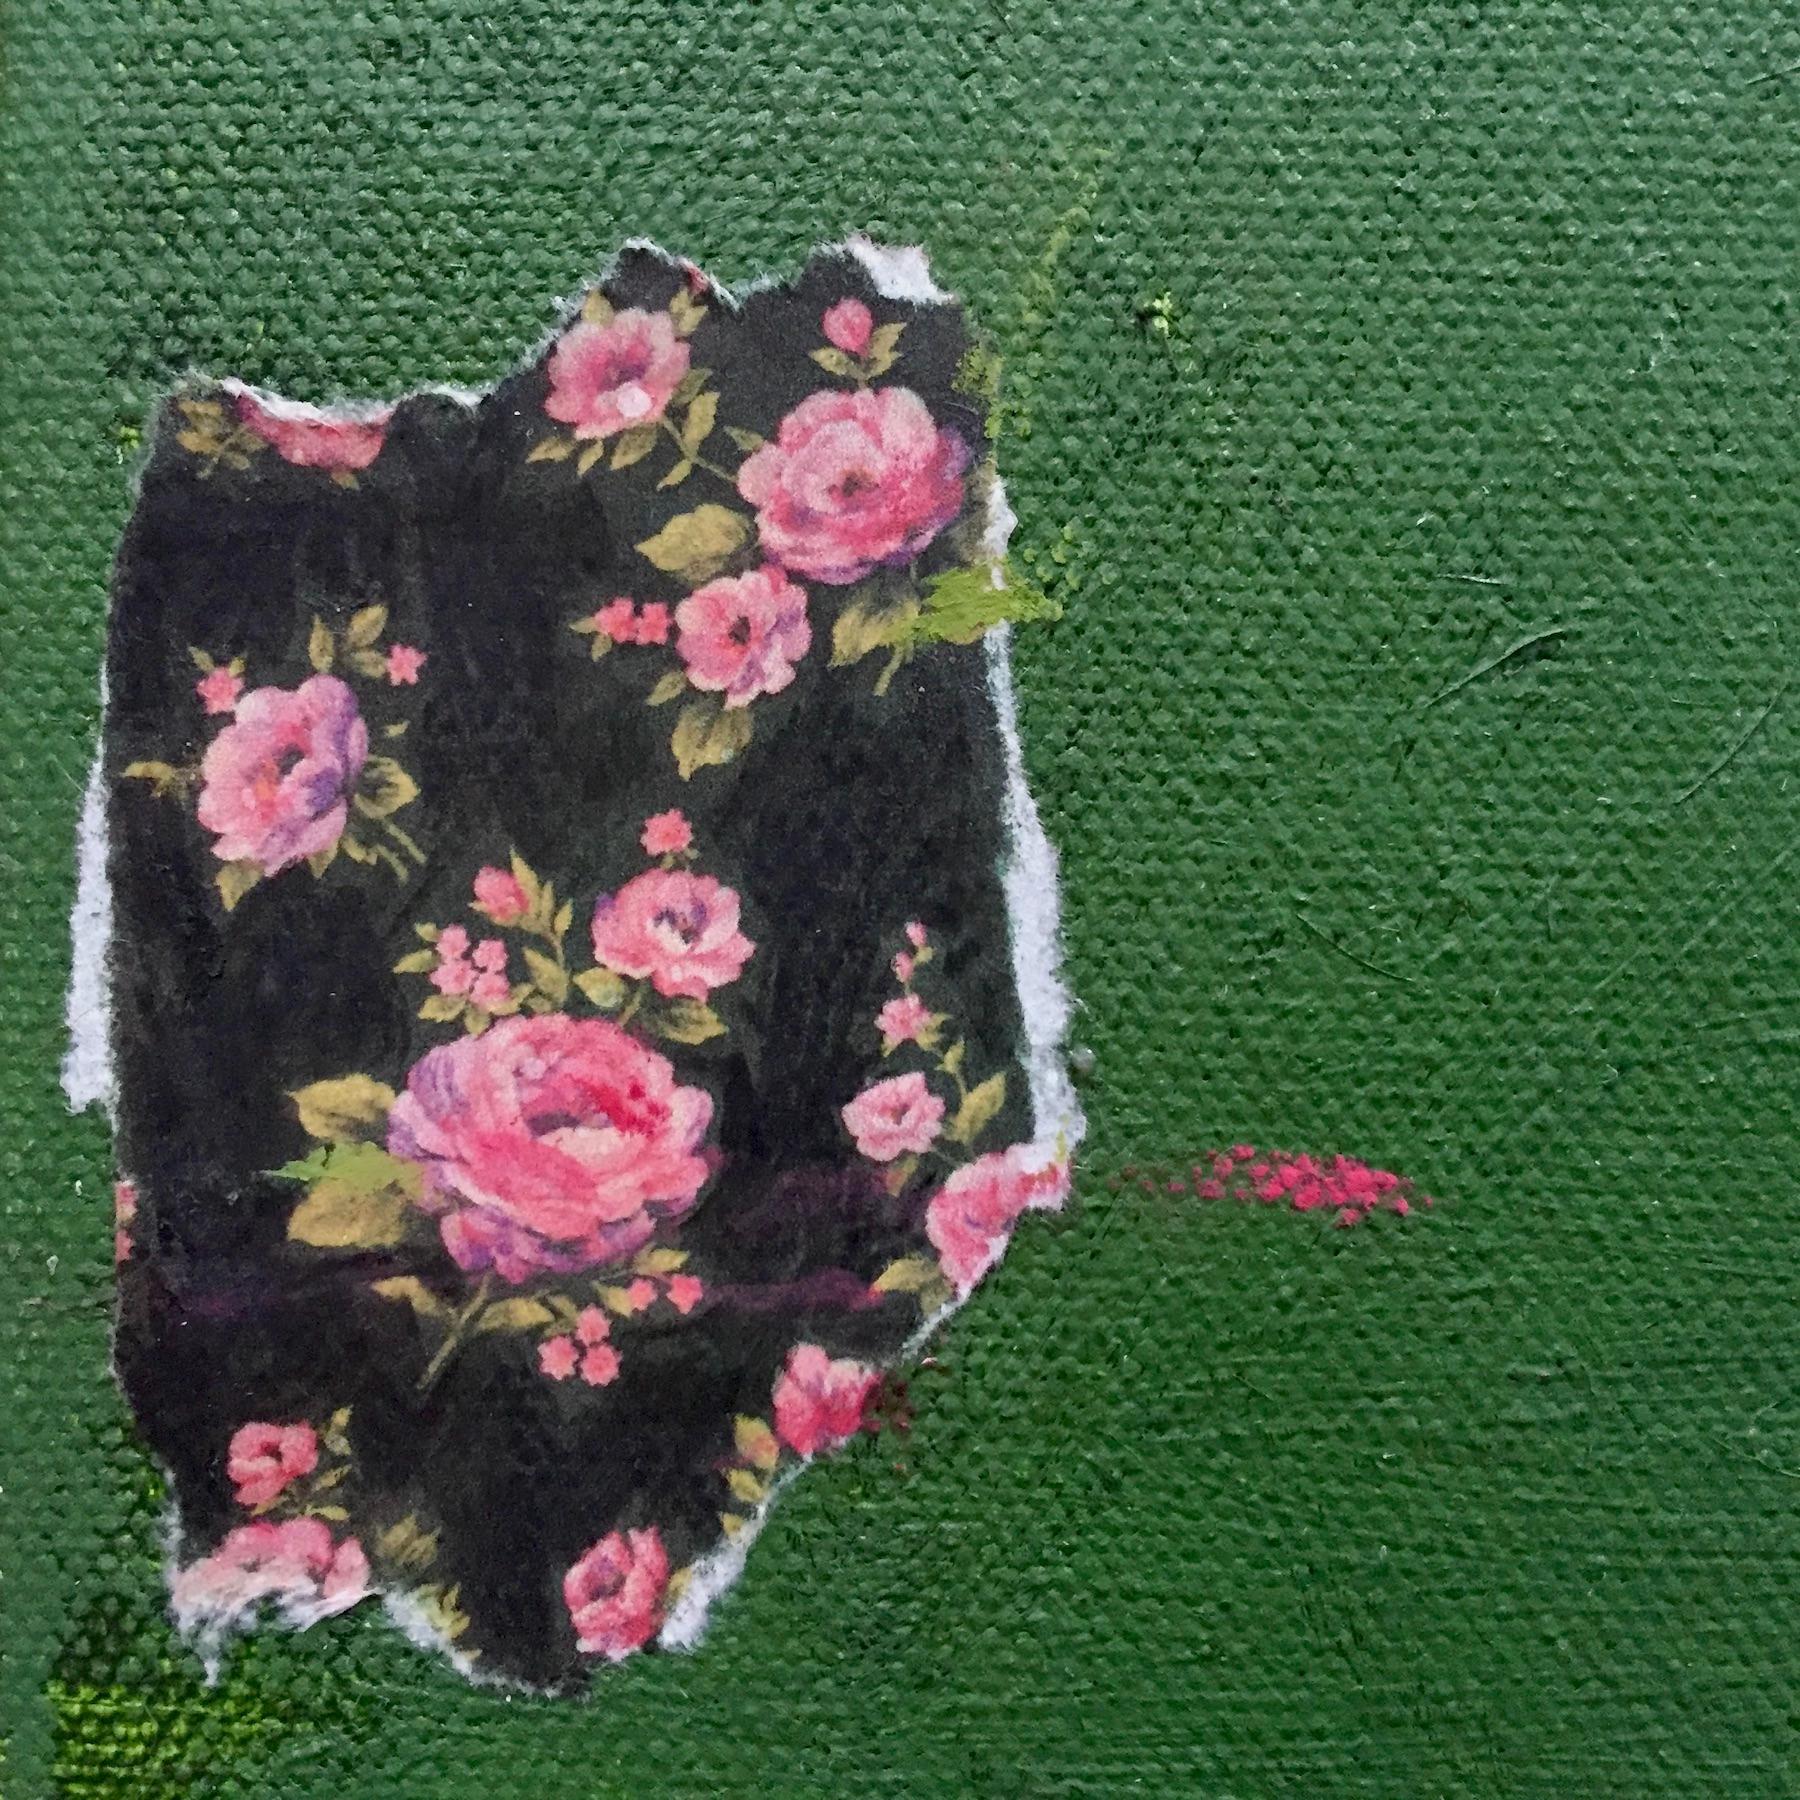 Wandblume (5 Zoll x 7 Zoll, grün, rosa, schwarz, weiß, florales abstraktes Gemälde) – Painting von Andrea Stajan-Ferkul